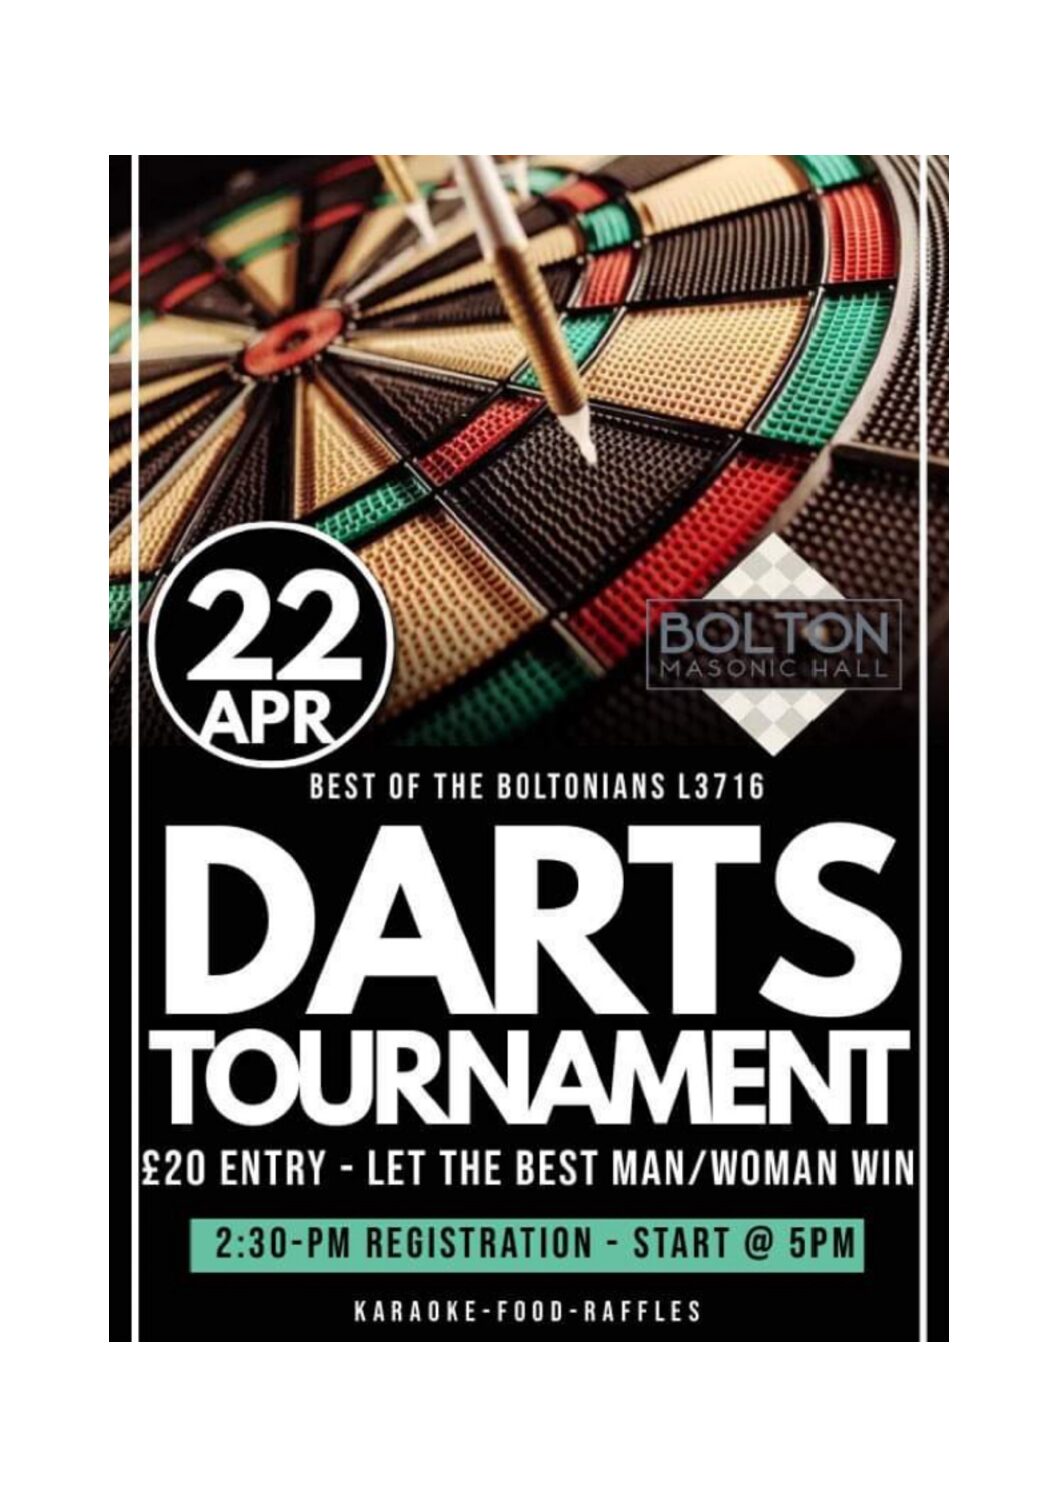 Bolton Darts Tournament 22nd April at Bolton Masonic Hall